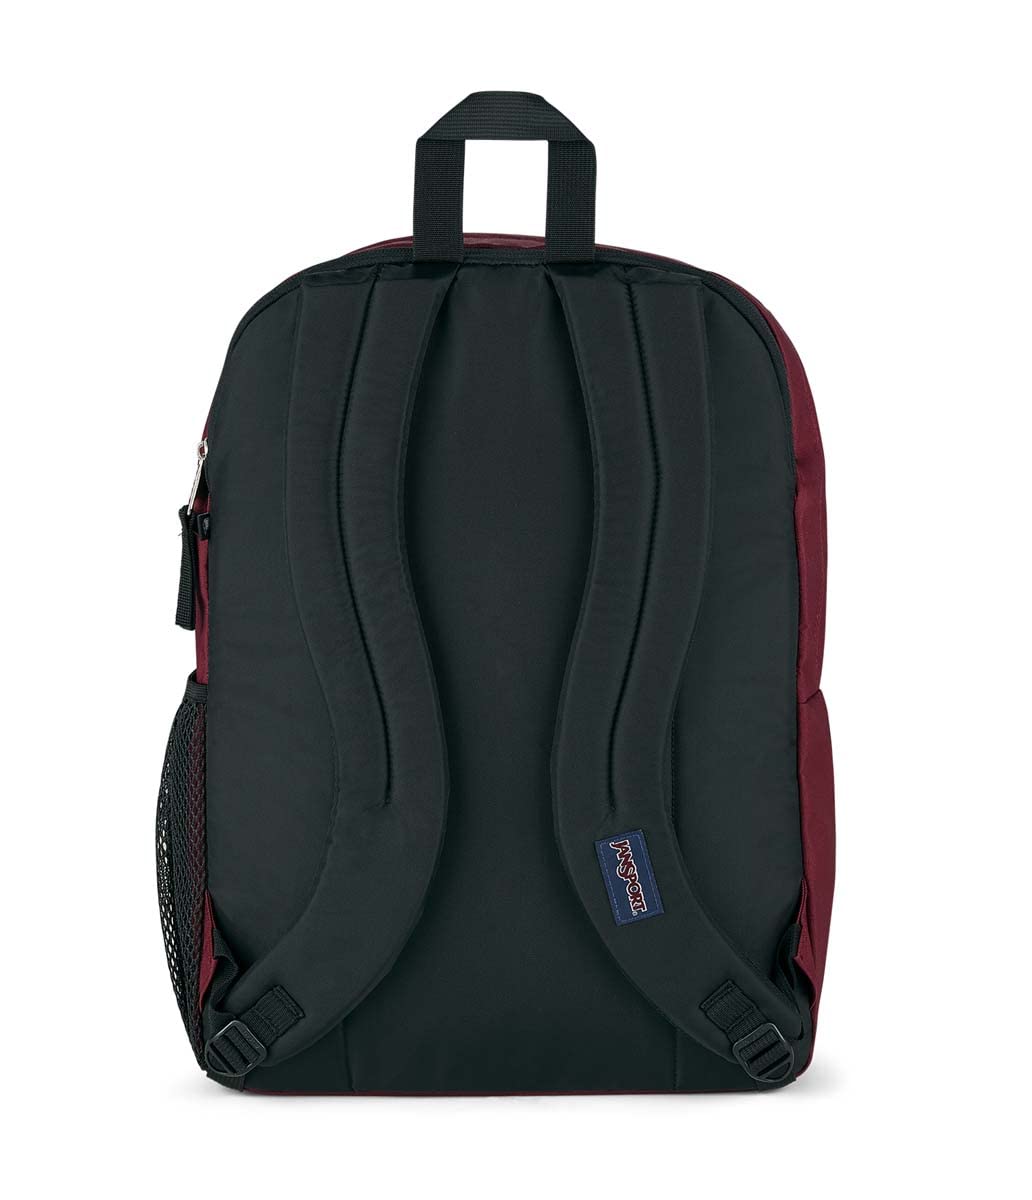 JanSport Big Laptop Backpack for College - Computer Bag with 2 Compartments, Ergonomic Shoulder Straps, 15” Laptop Sleeve, Haul Handle - Book Rucksack, Russet Red